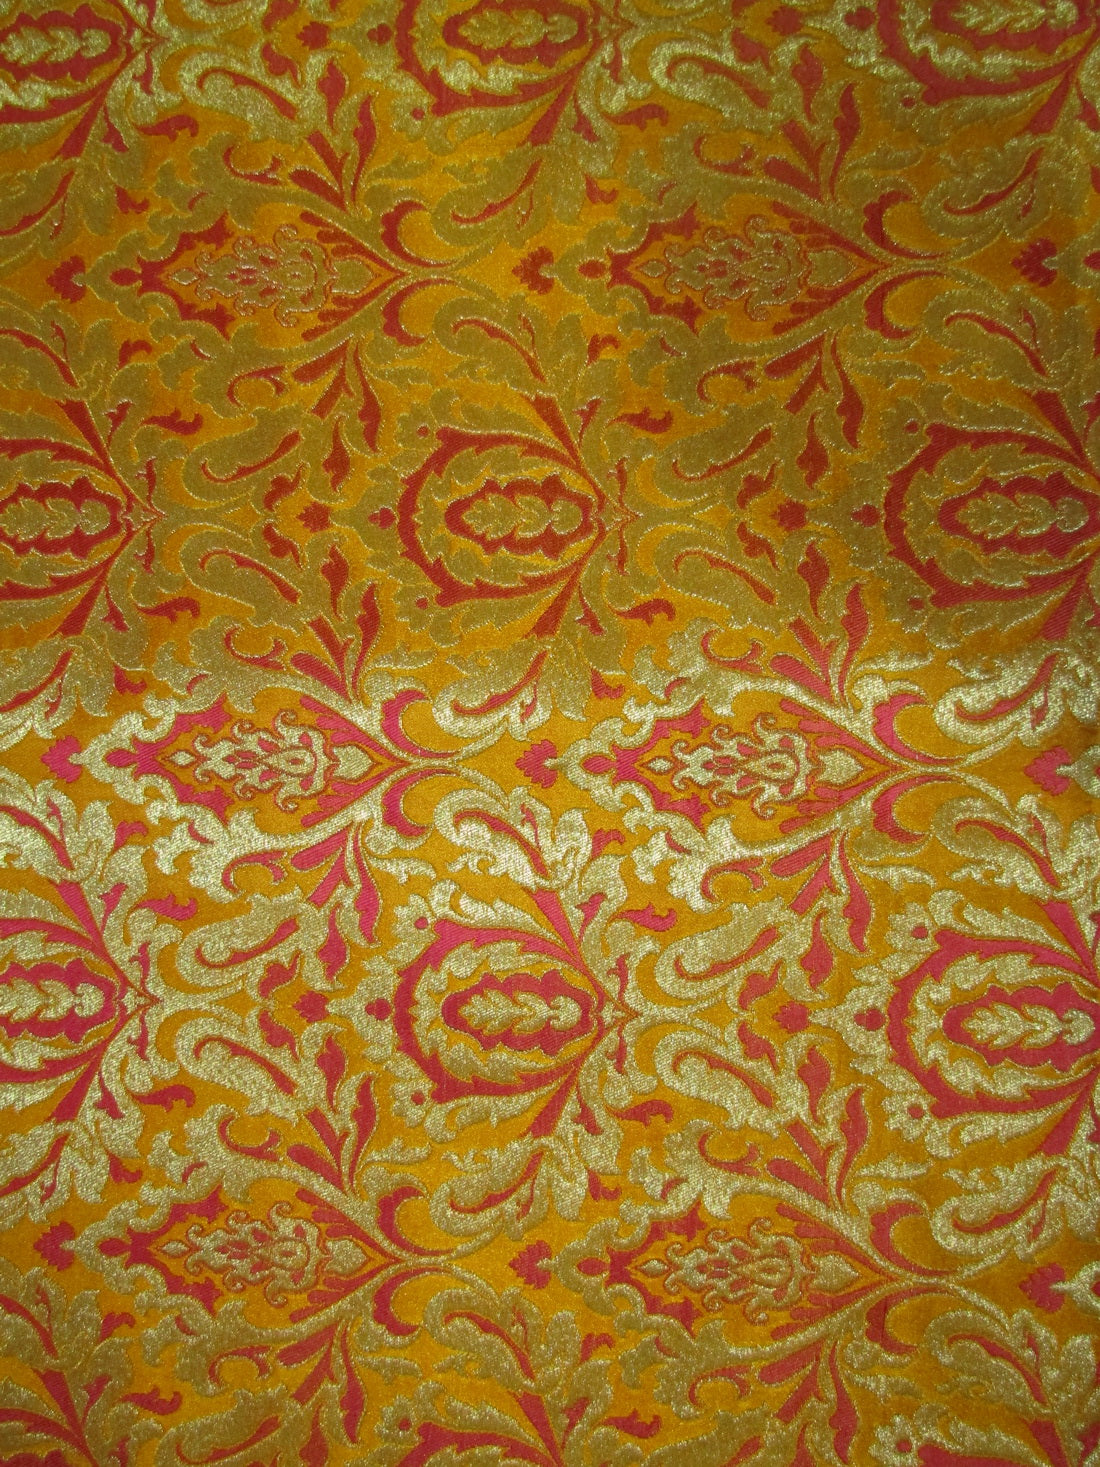 Heavy Brocade fabric mango gold/pink x metallic gold color 36&quot;